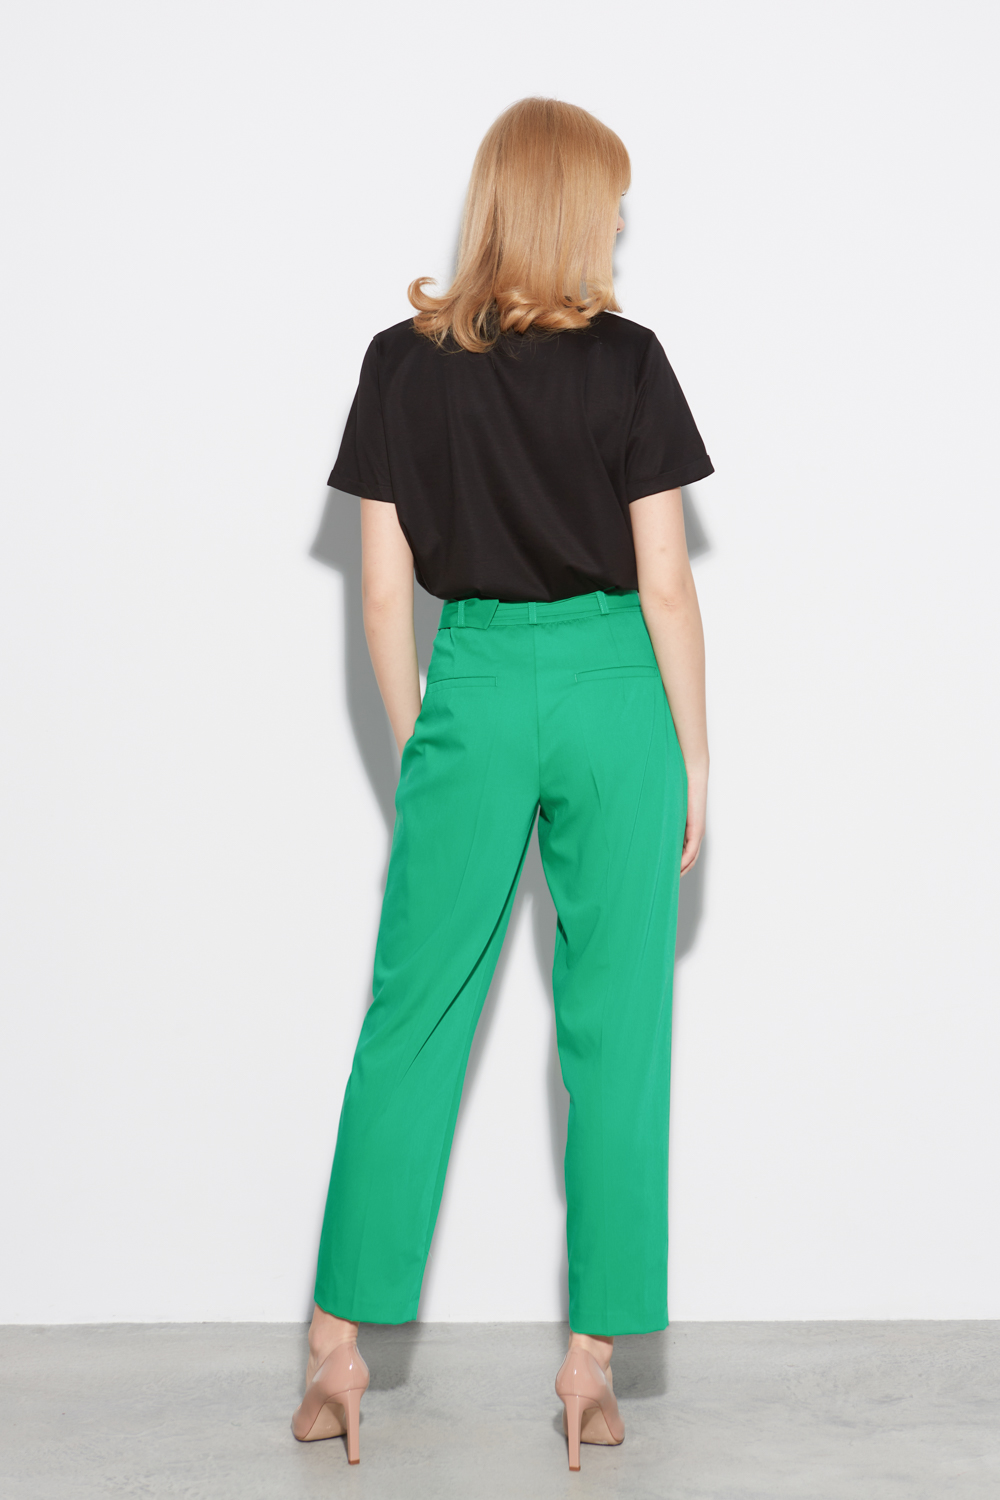 Pantalon-verde-cu-talie-inalta-Olivia-ETIC